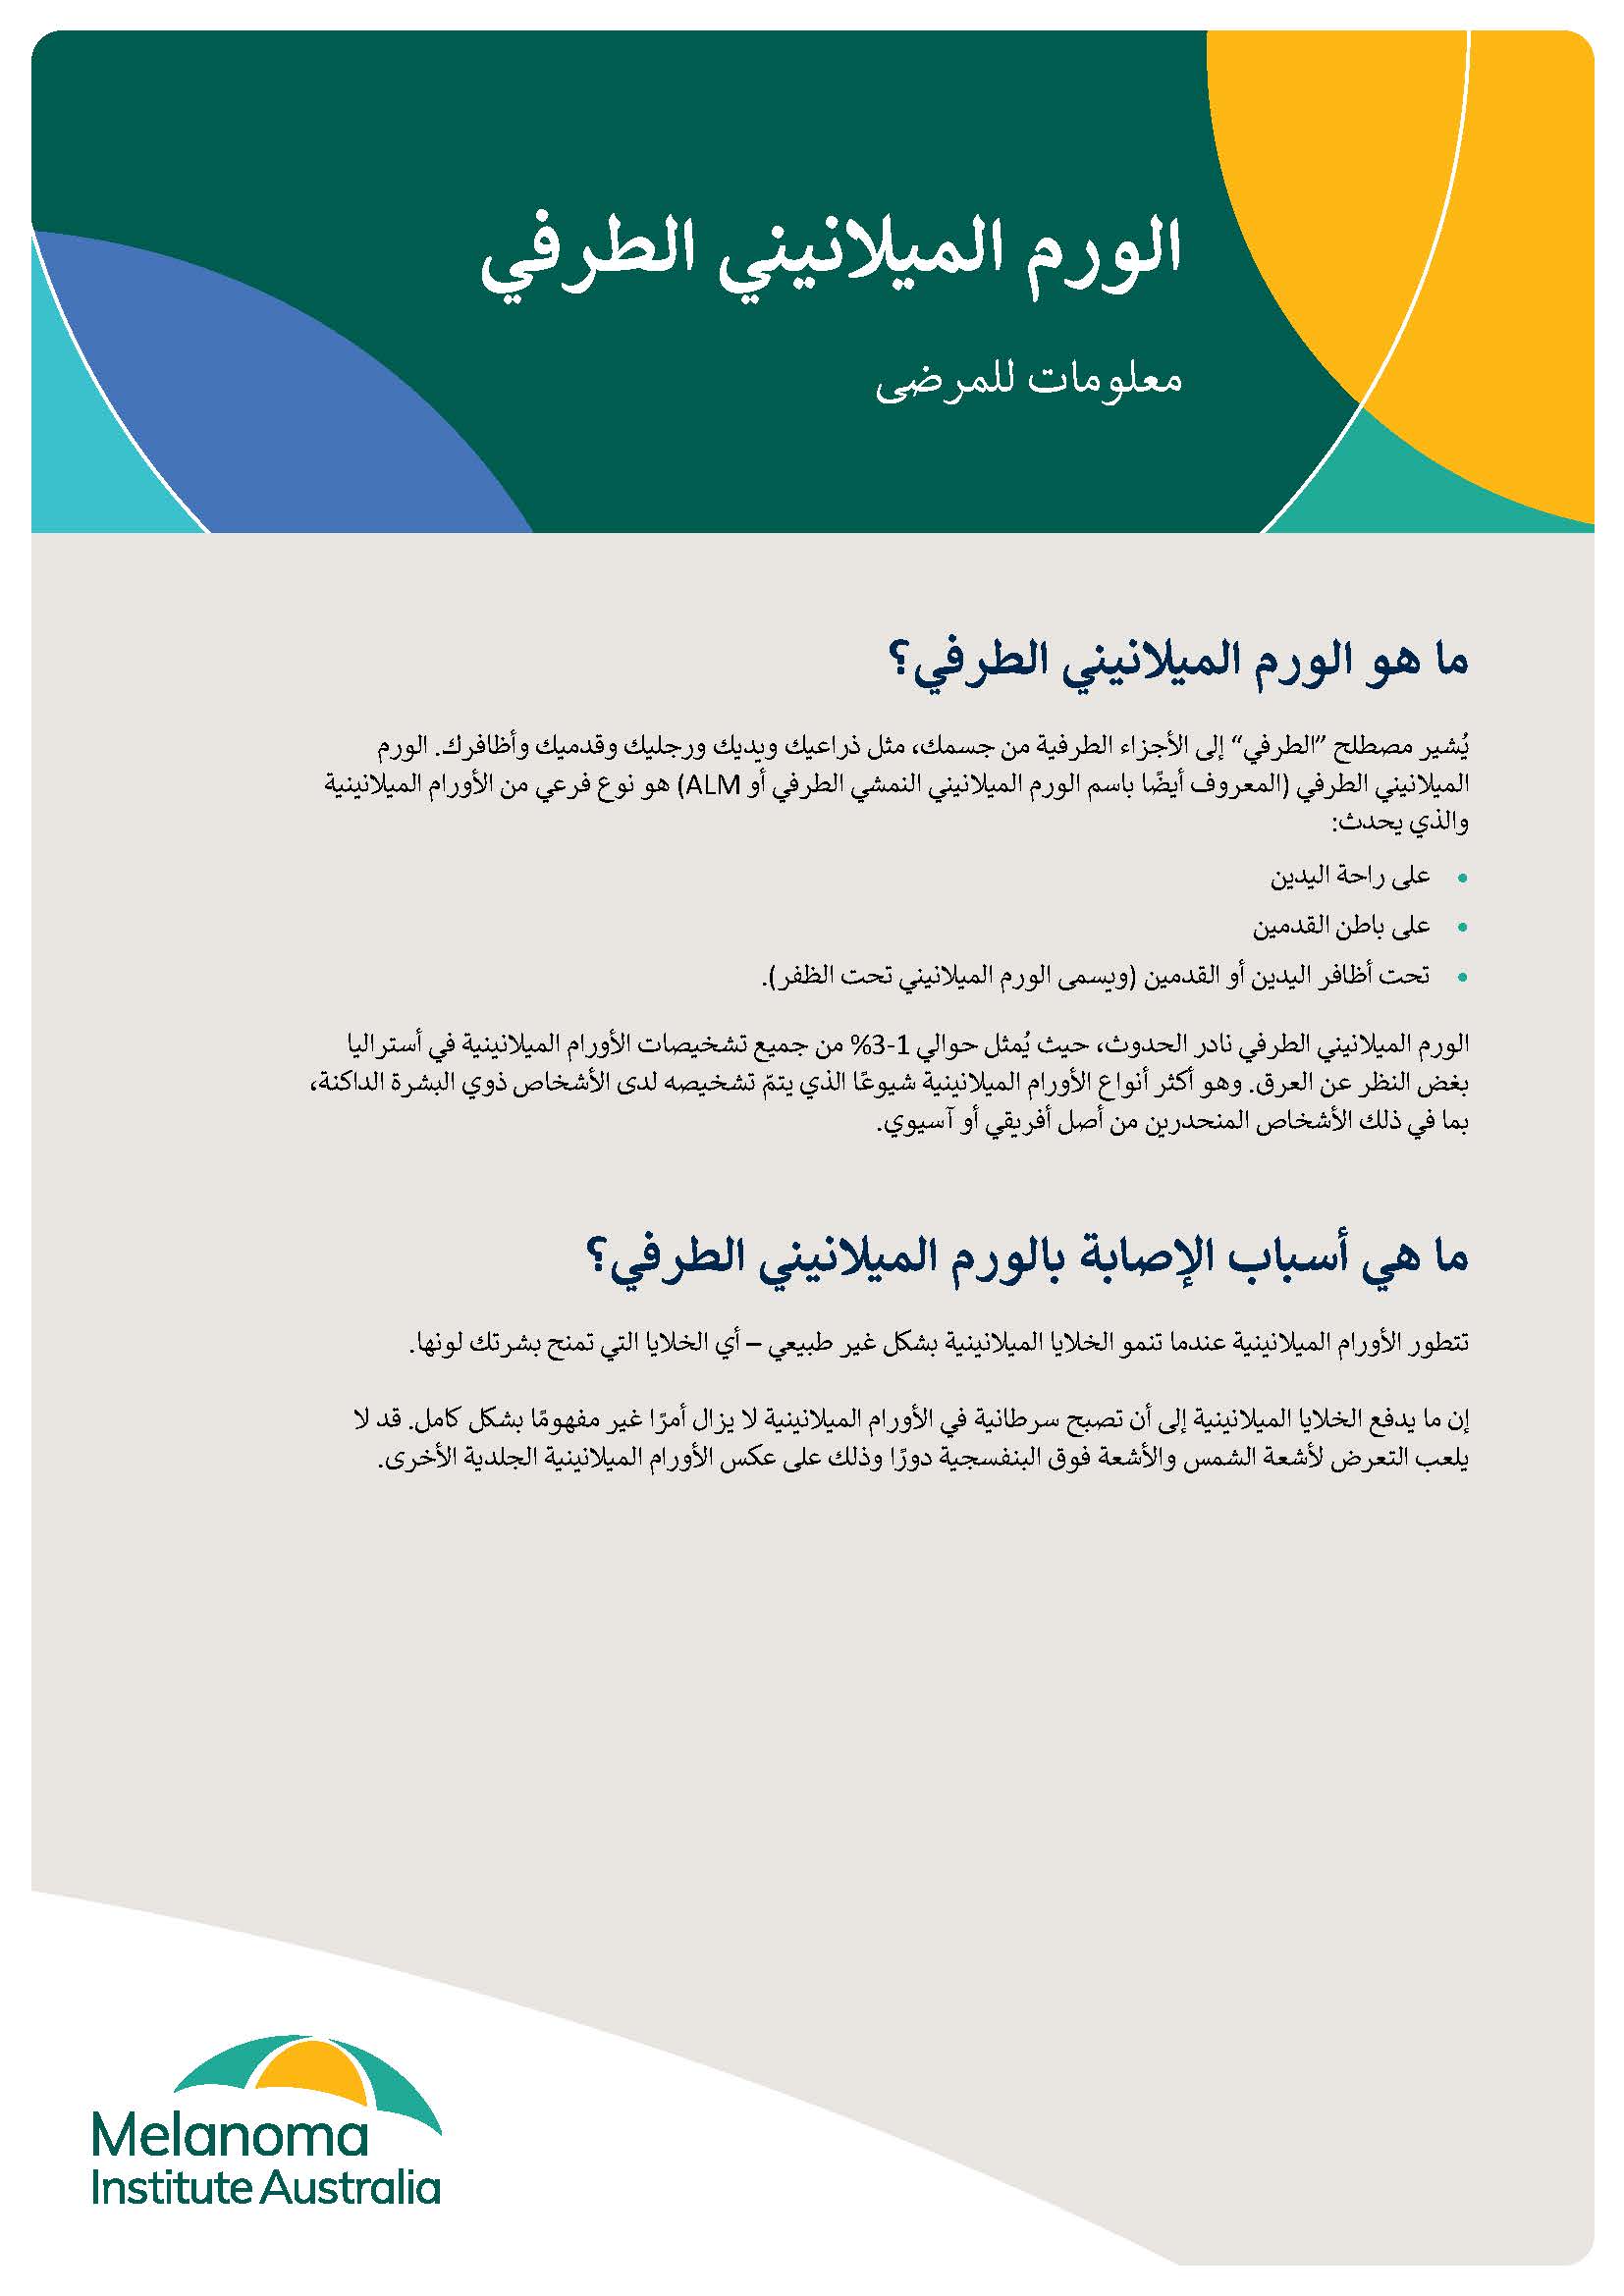 acral_melanoma_brochure_arabic